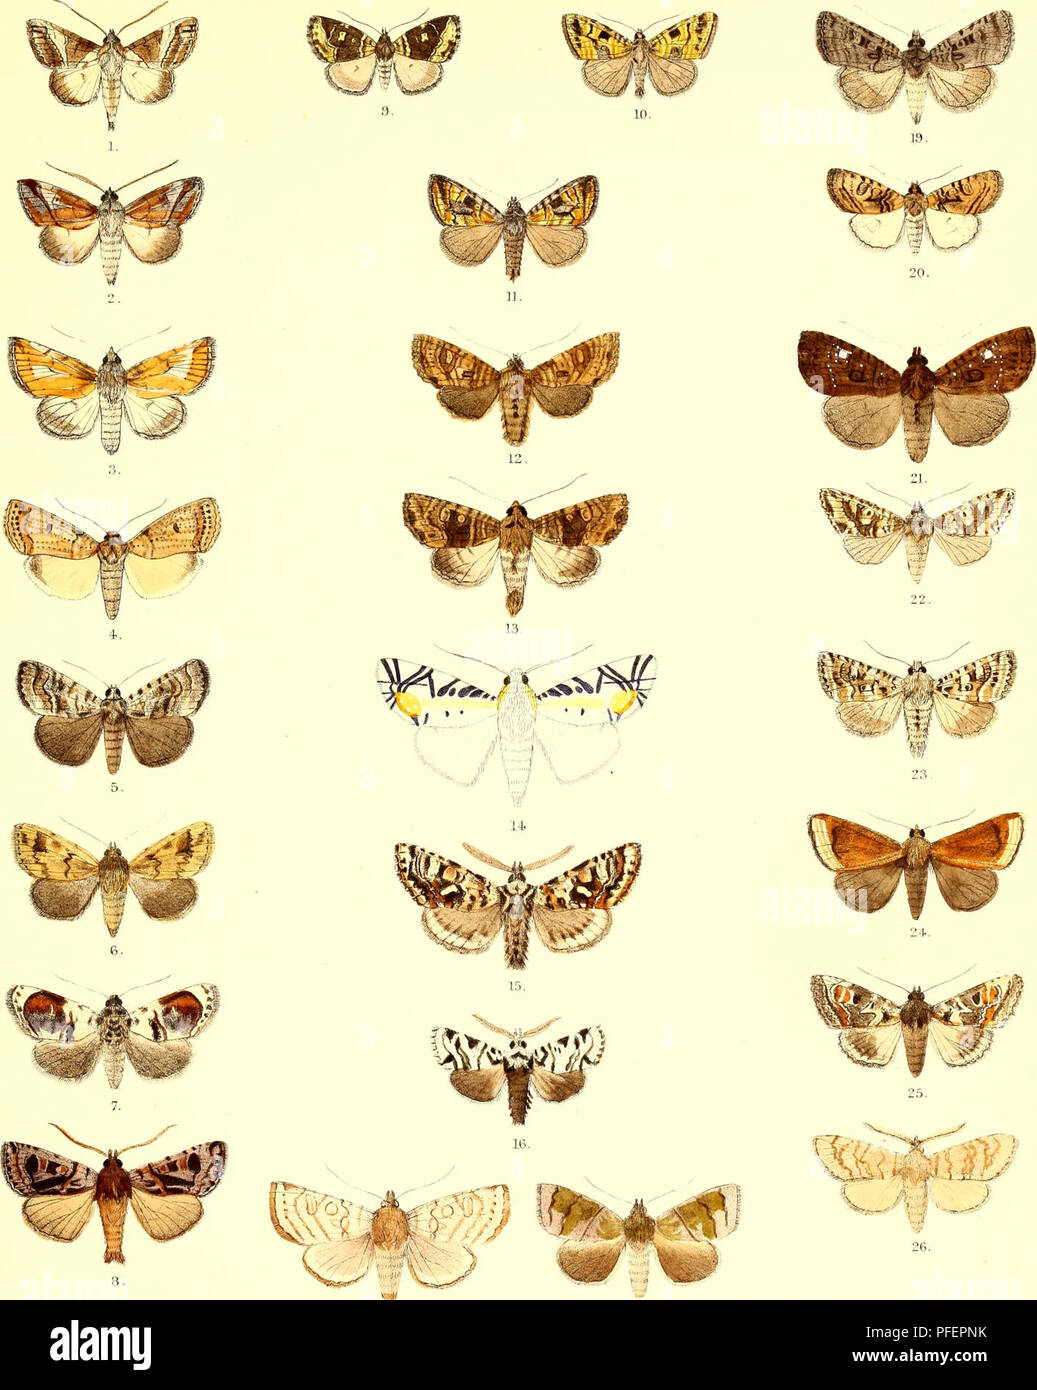 . Descriptions of new Indian lepidopterous insects from the collection of the late Mr. W.S. Atkinson. Lepidoptera -- India; Lepidoptera. Asiatic Society. Bengal Lepidoptera. Plate. W.. 17. 18. F. C. Moore, del et )ith. Mmtem Bros, imp. l.Risoba vialis. 2.Pitrasa variegata. 3. P. vitellma. 4. Kerala multipunctata. 5. Tycracona transversa, 6. Borolia furcifera. 7. Calymera picta. 8. Mamestradecorata. 9. Motama cidarioides. 10. M.aurata. 11.M.decorata. 12. Luperina pa.rdaria.lS.Apamea denticulosa. 14. Baorisaliieroglyphica. 15. Pachetra heterocampa. 16. Chandata partita. 17. Dimya smuata. 15. Ean Stock Photo